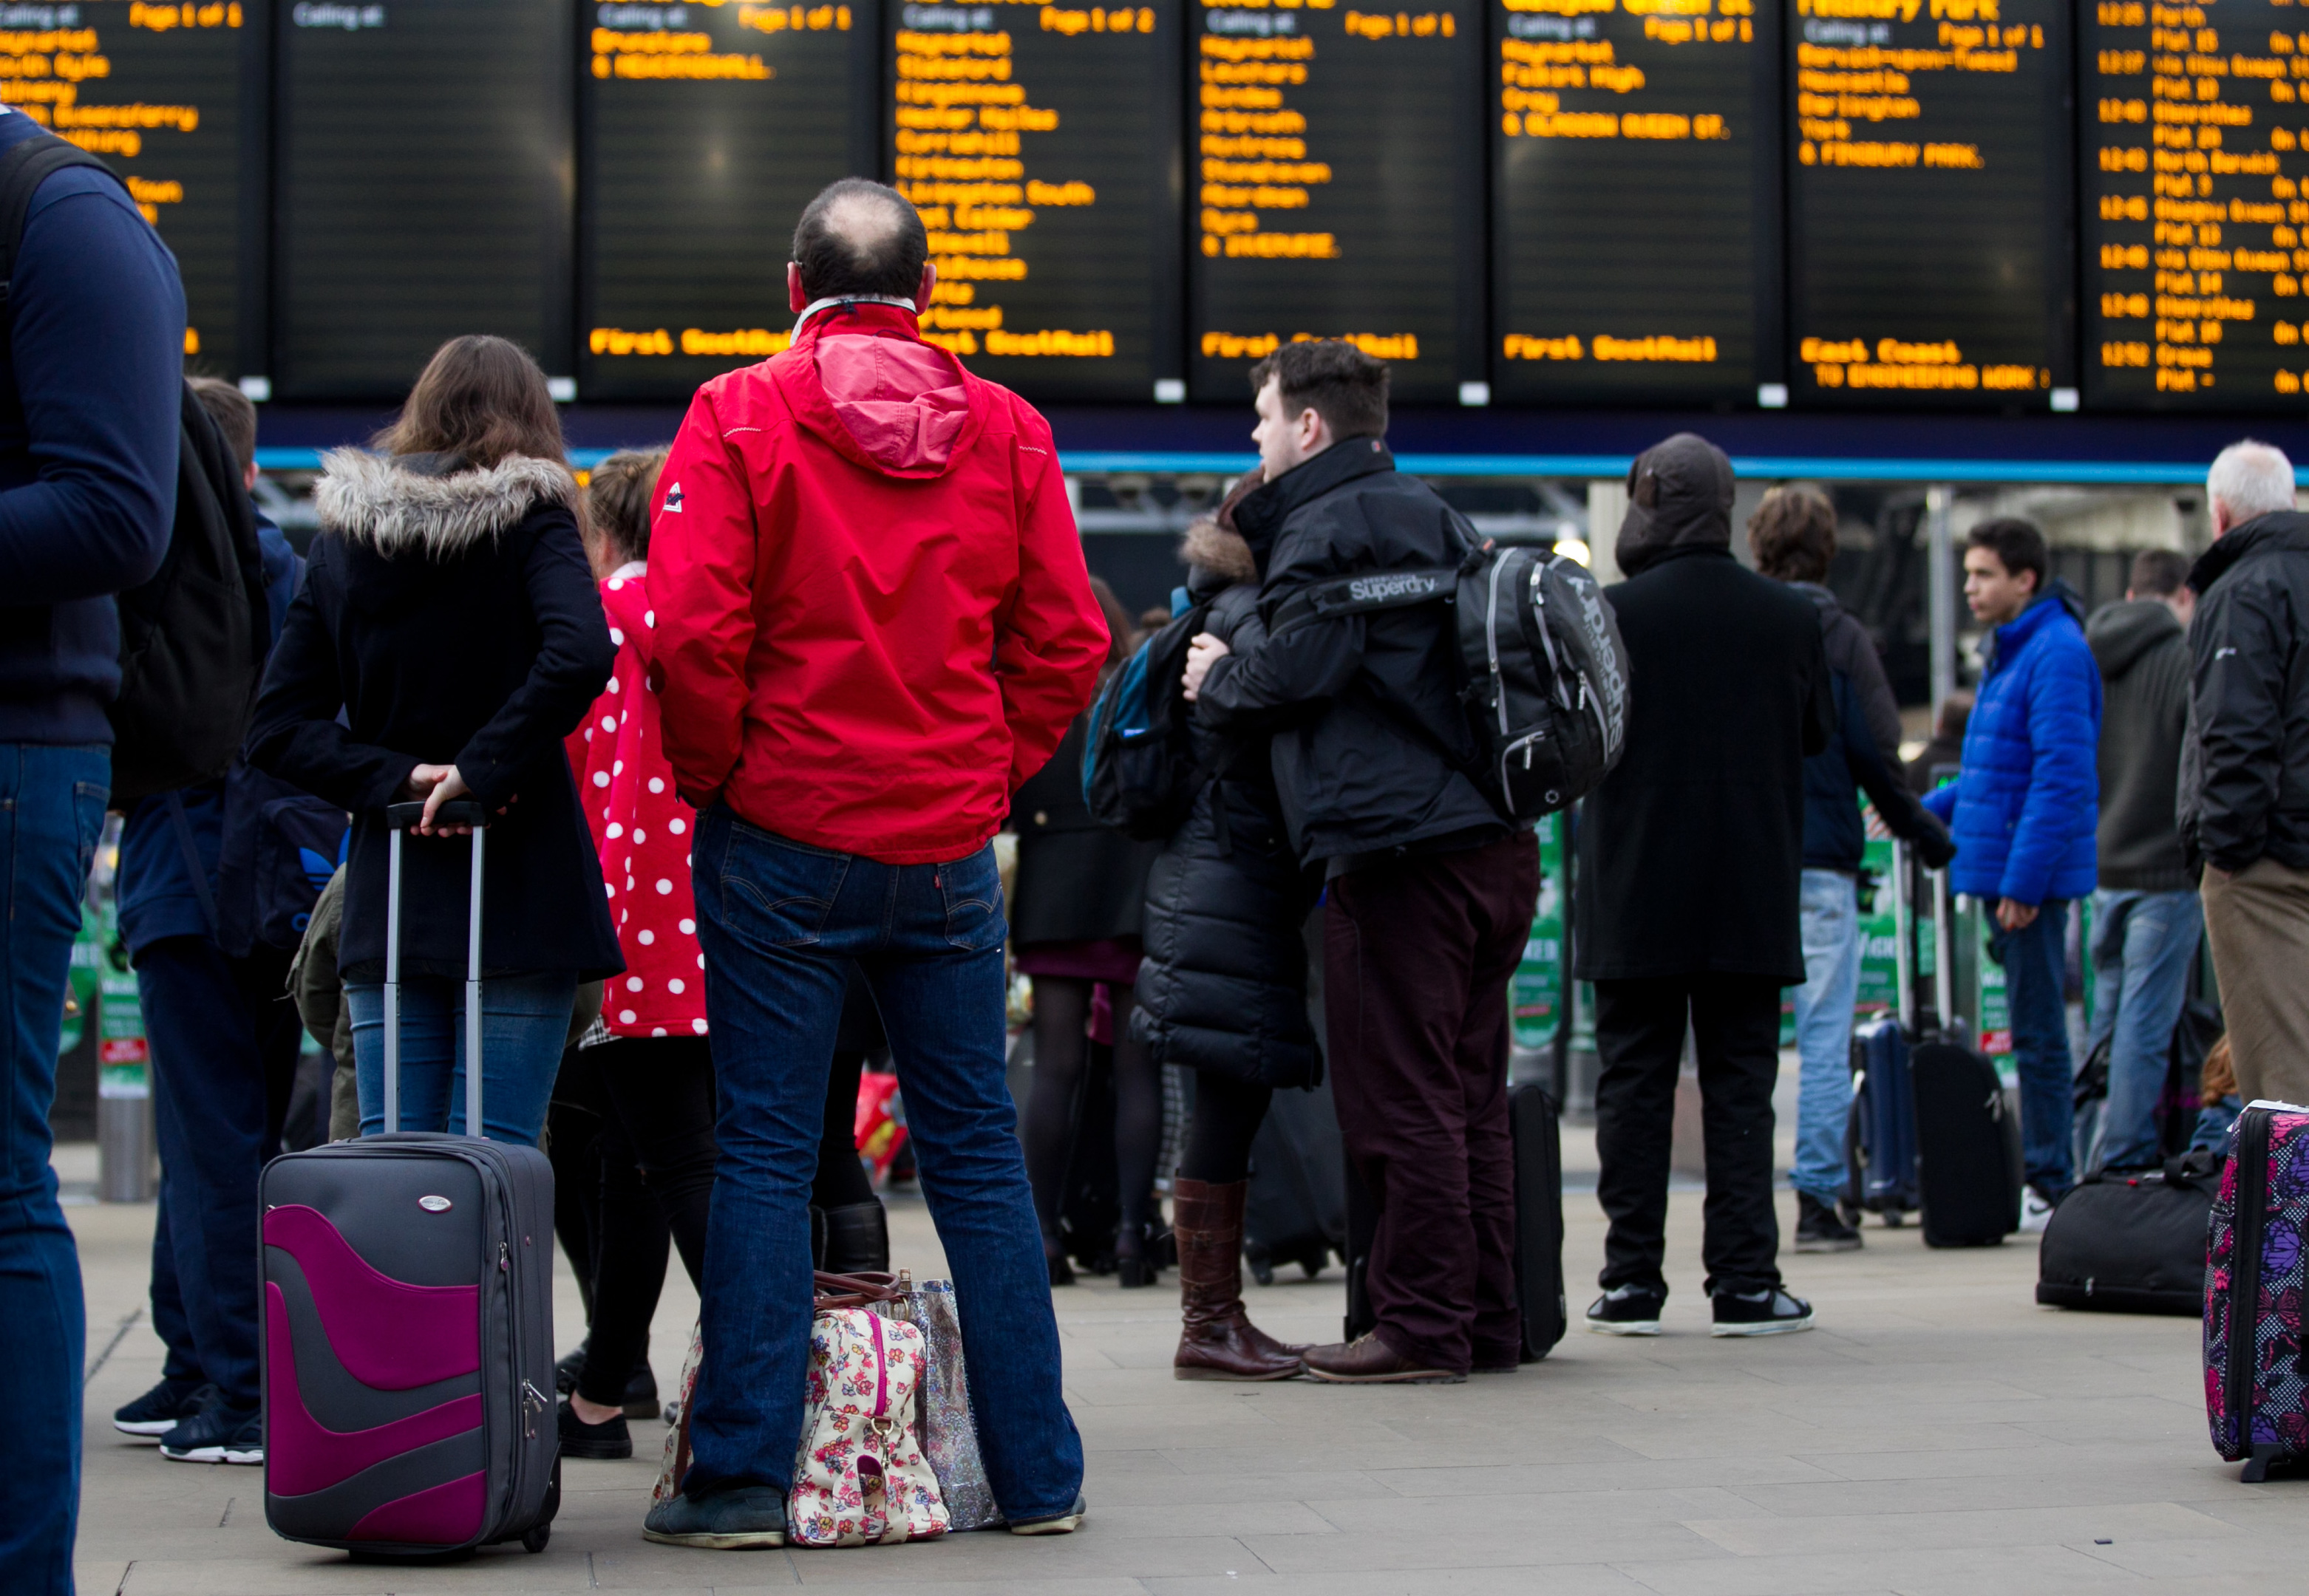 Passengers at Waverley train station, Edinburgh (Andrew Cawley, DC Thomson)